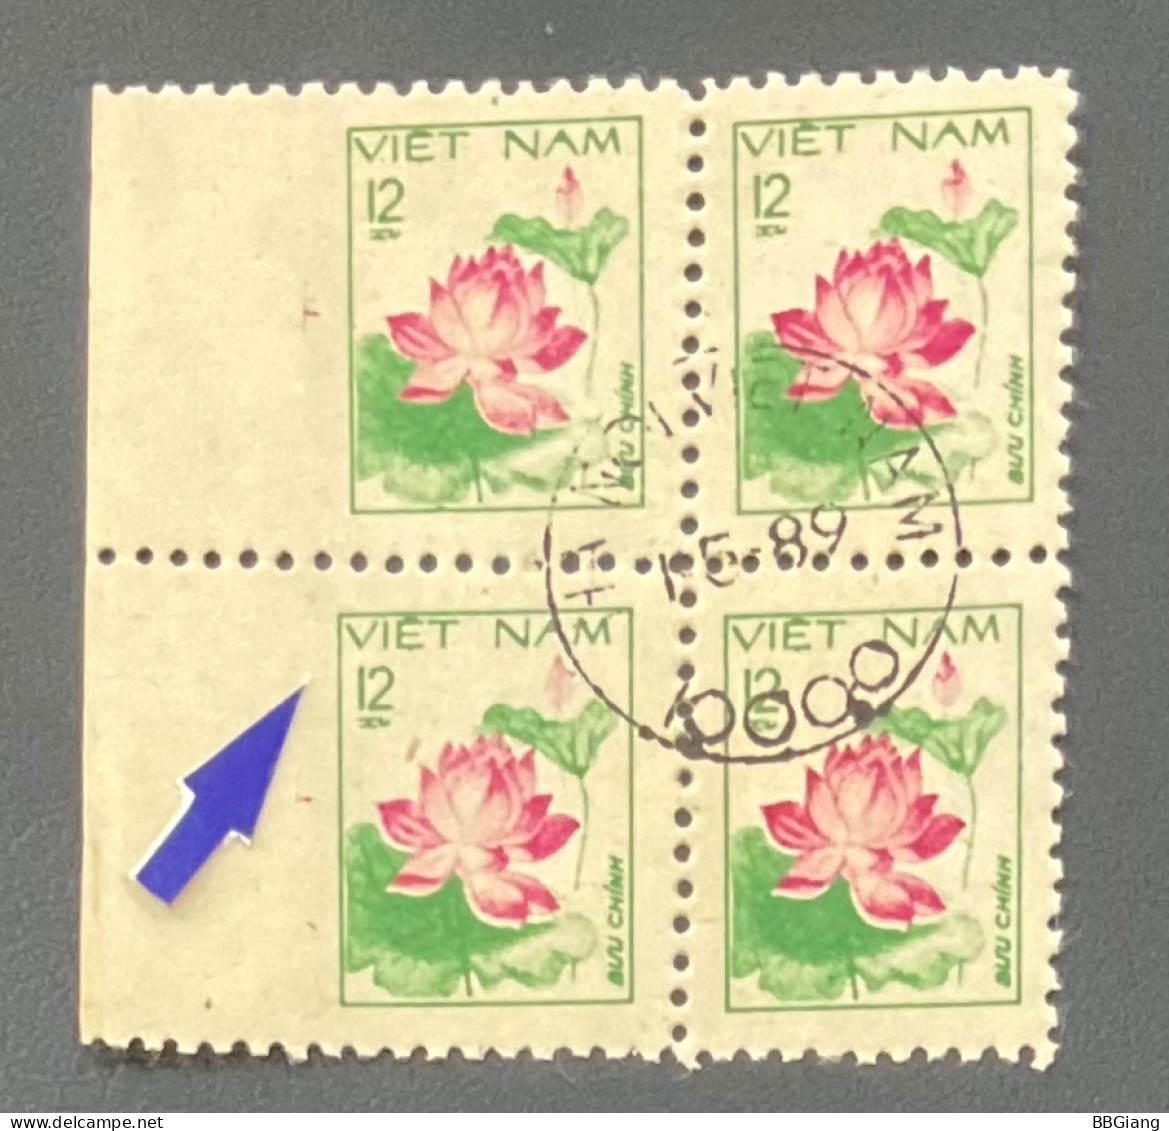 VietNam Error Stamps, Lotus Flower, Missing Perforate. - Viêt-Nam